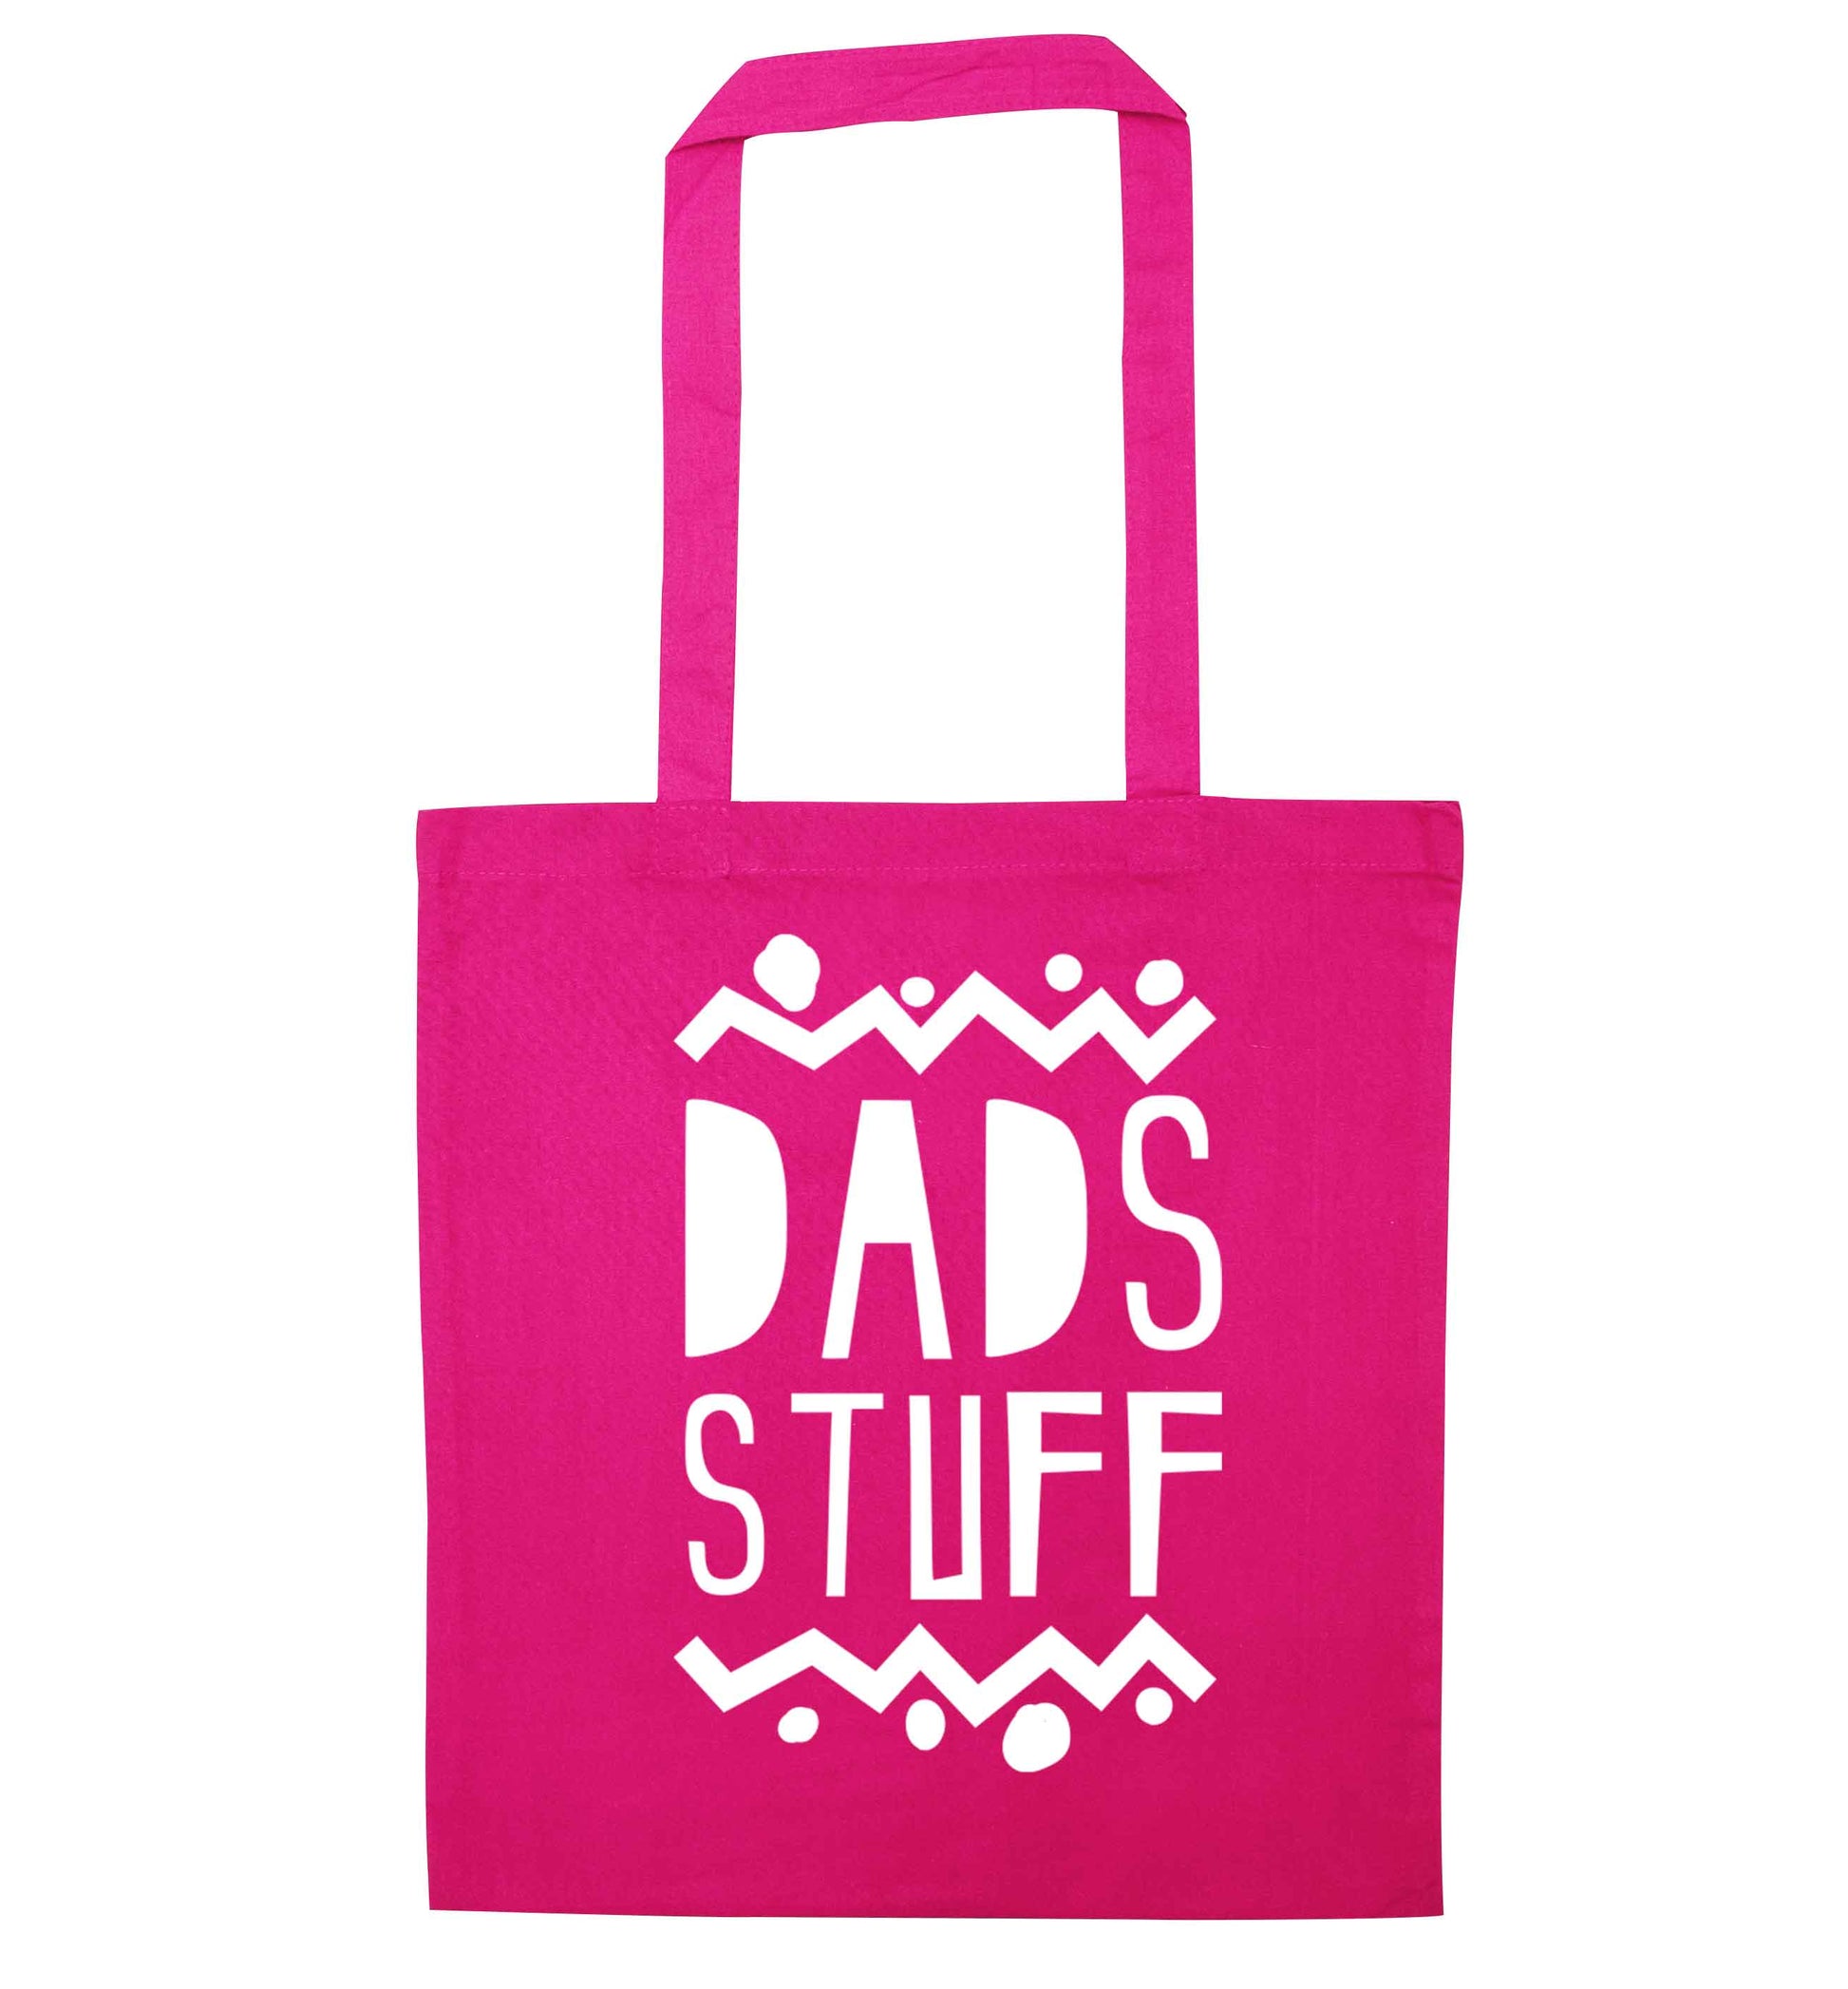 Dads stuff pink tote bag